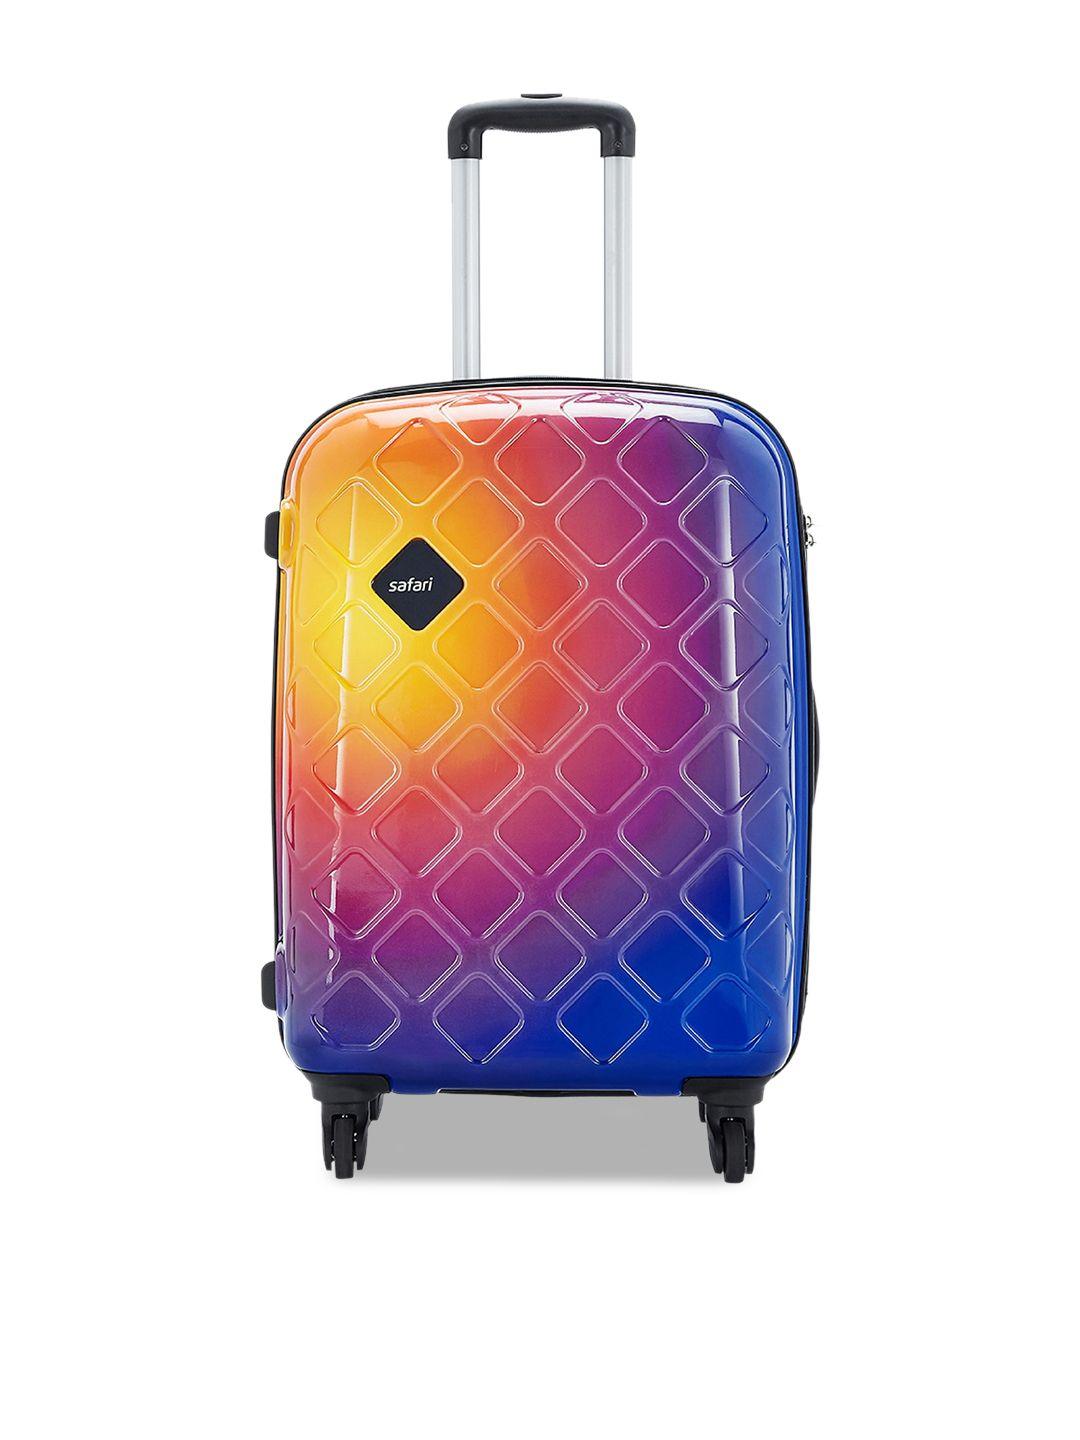 safari multi-coloured mosaic printed trolley bag